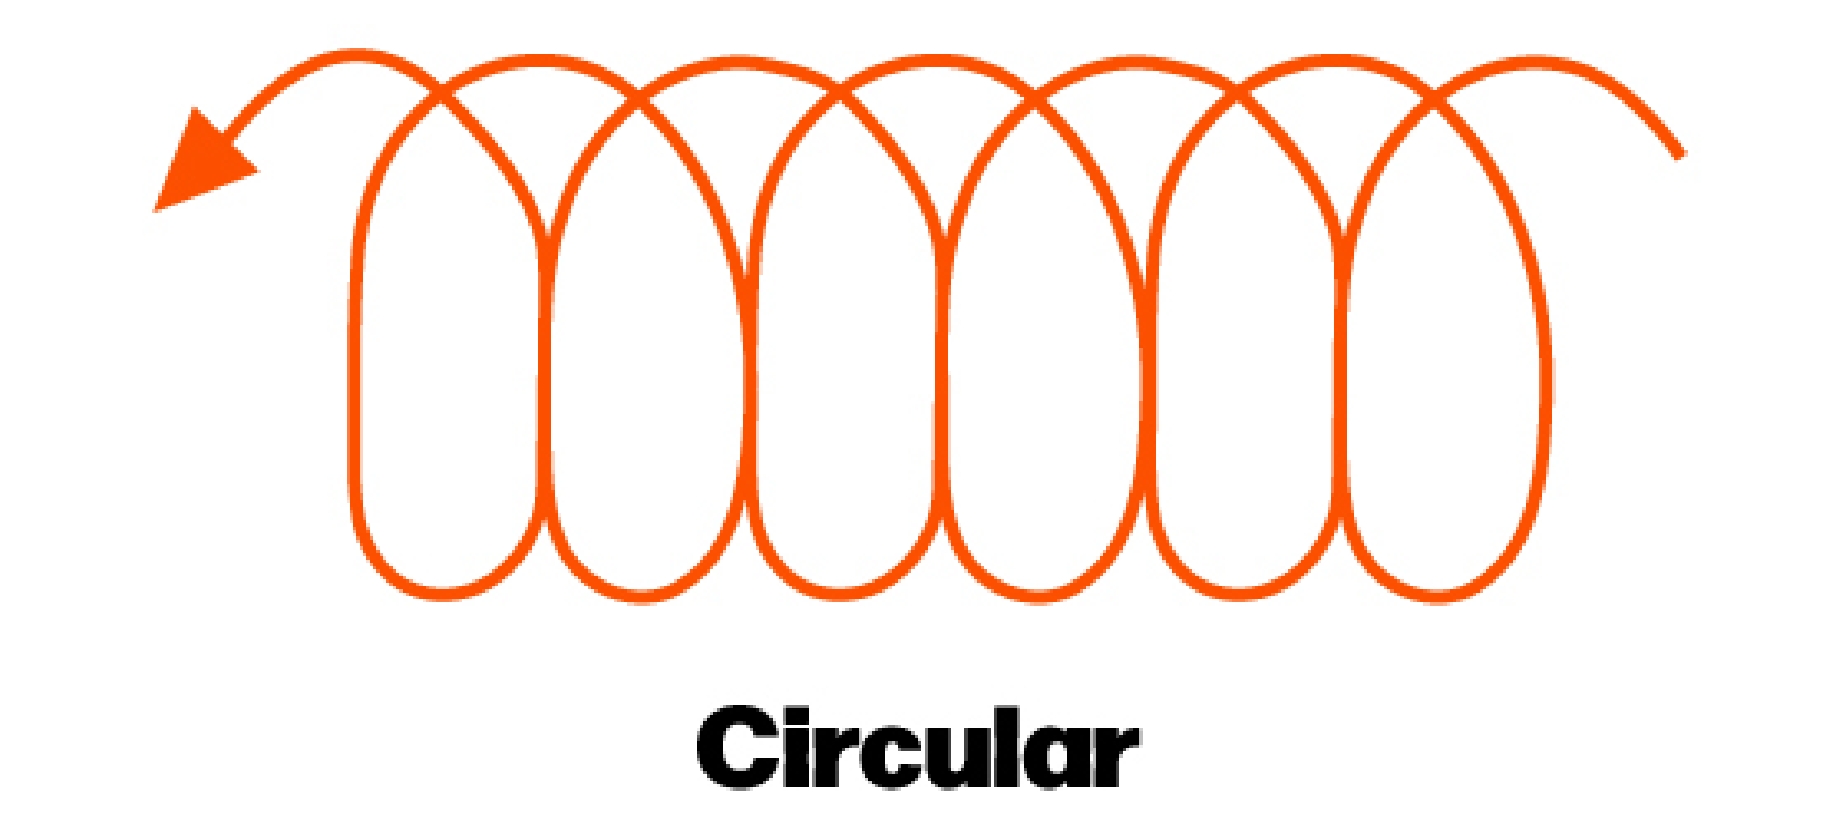 Circular Weave Graphic